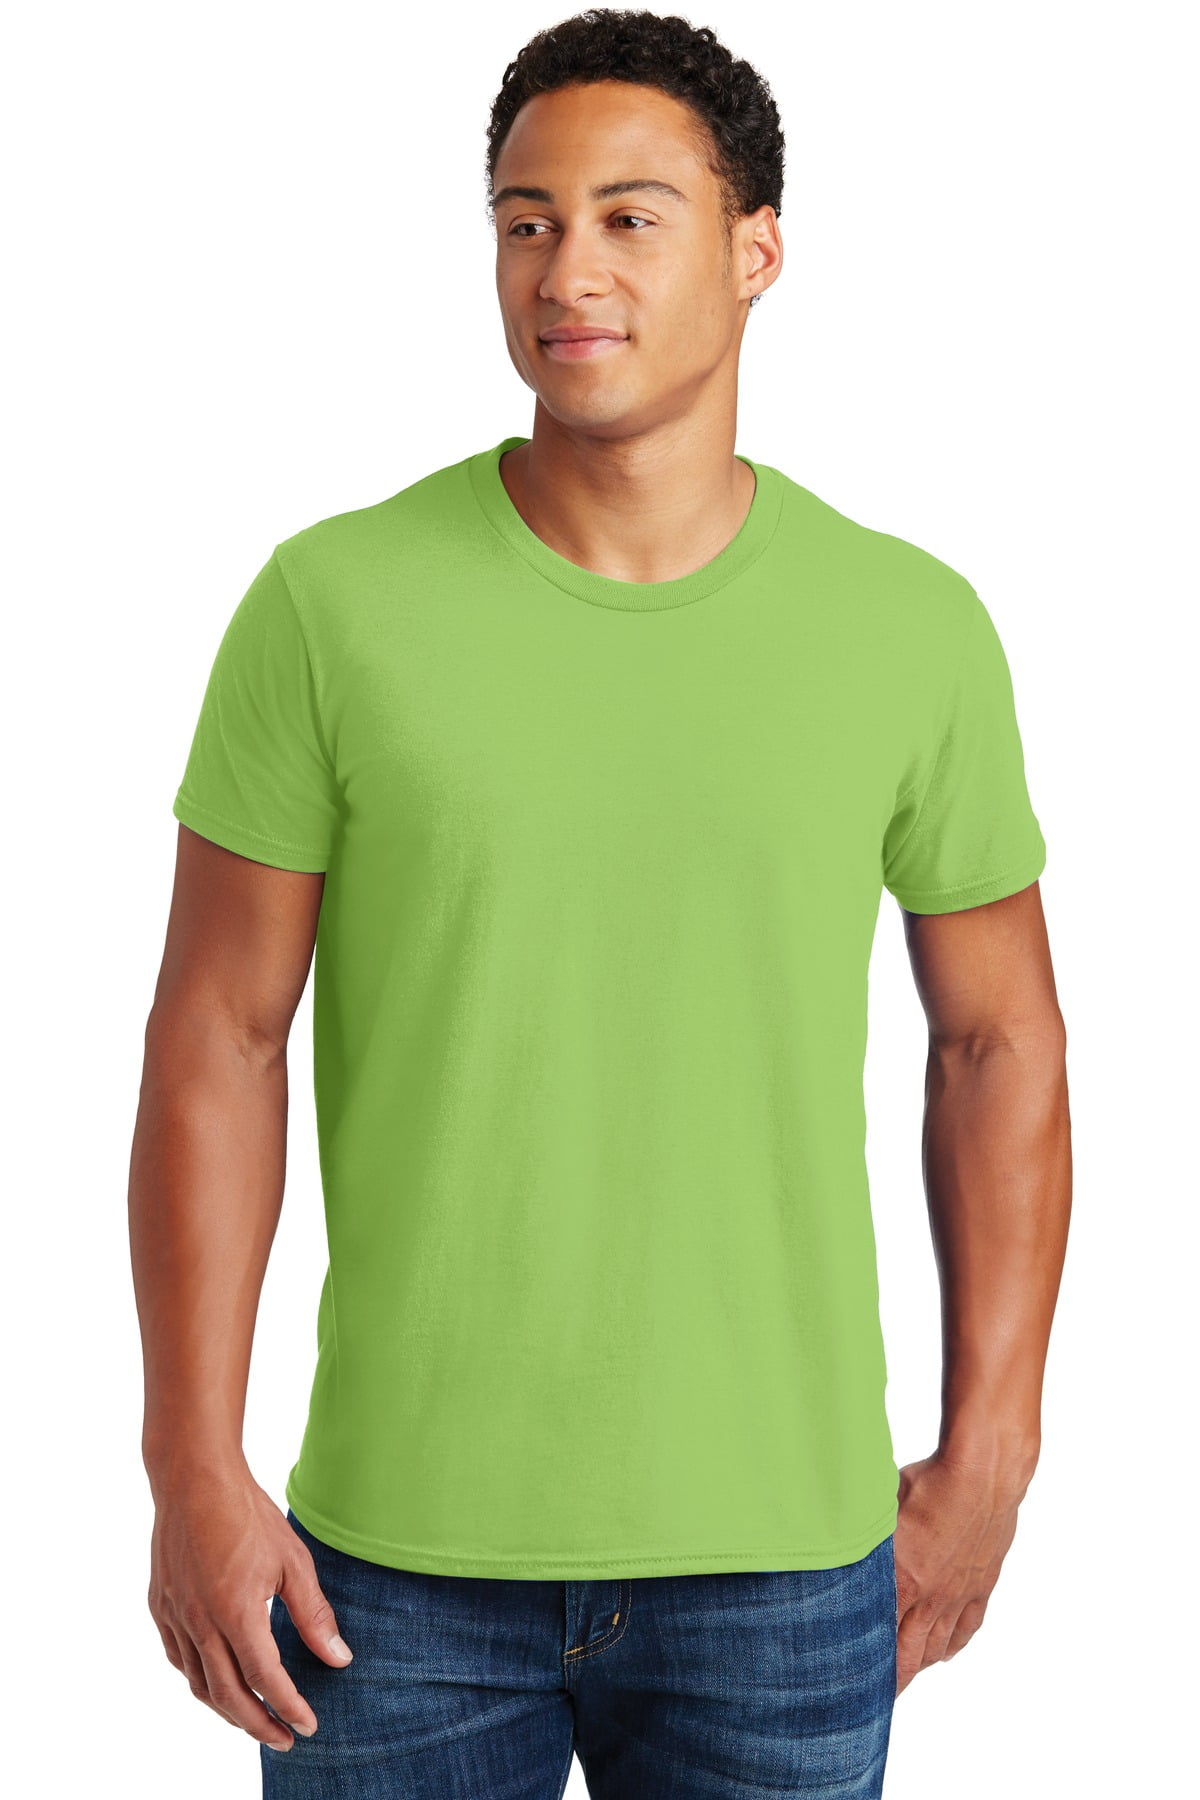 Hanes Nano-T Cotton T-Shirt - Walmart.com